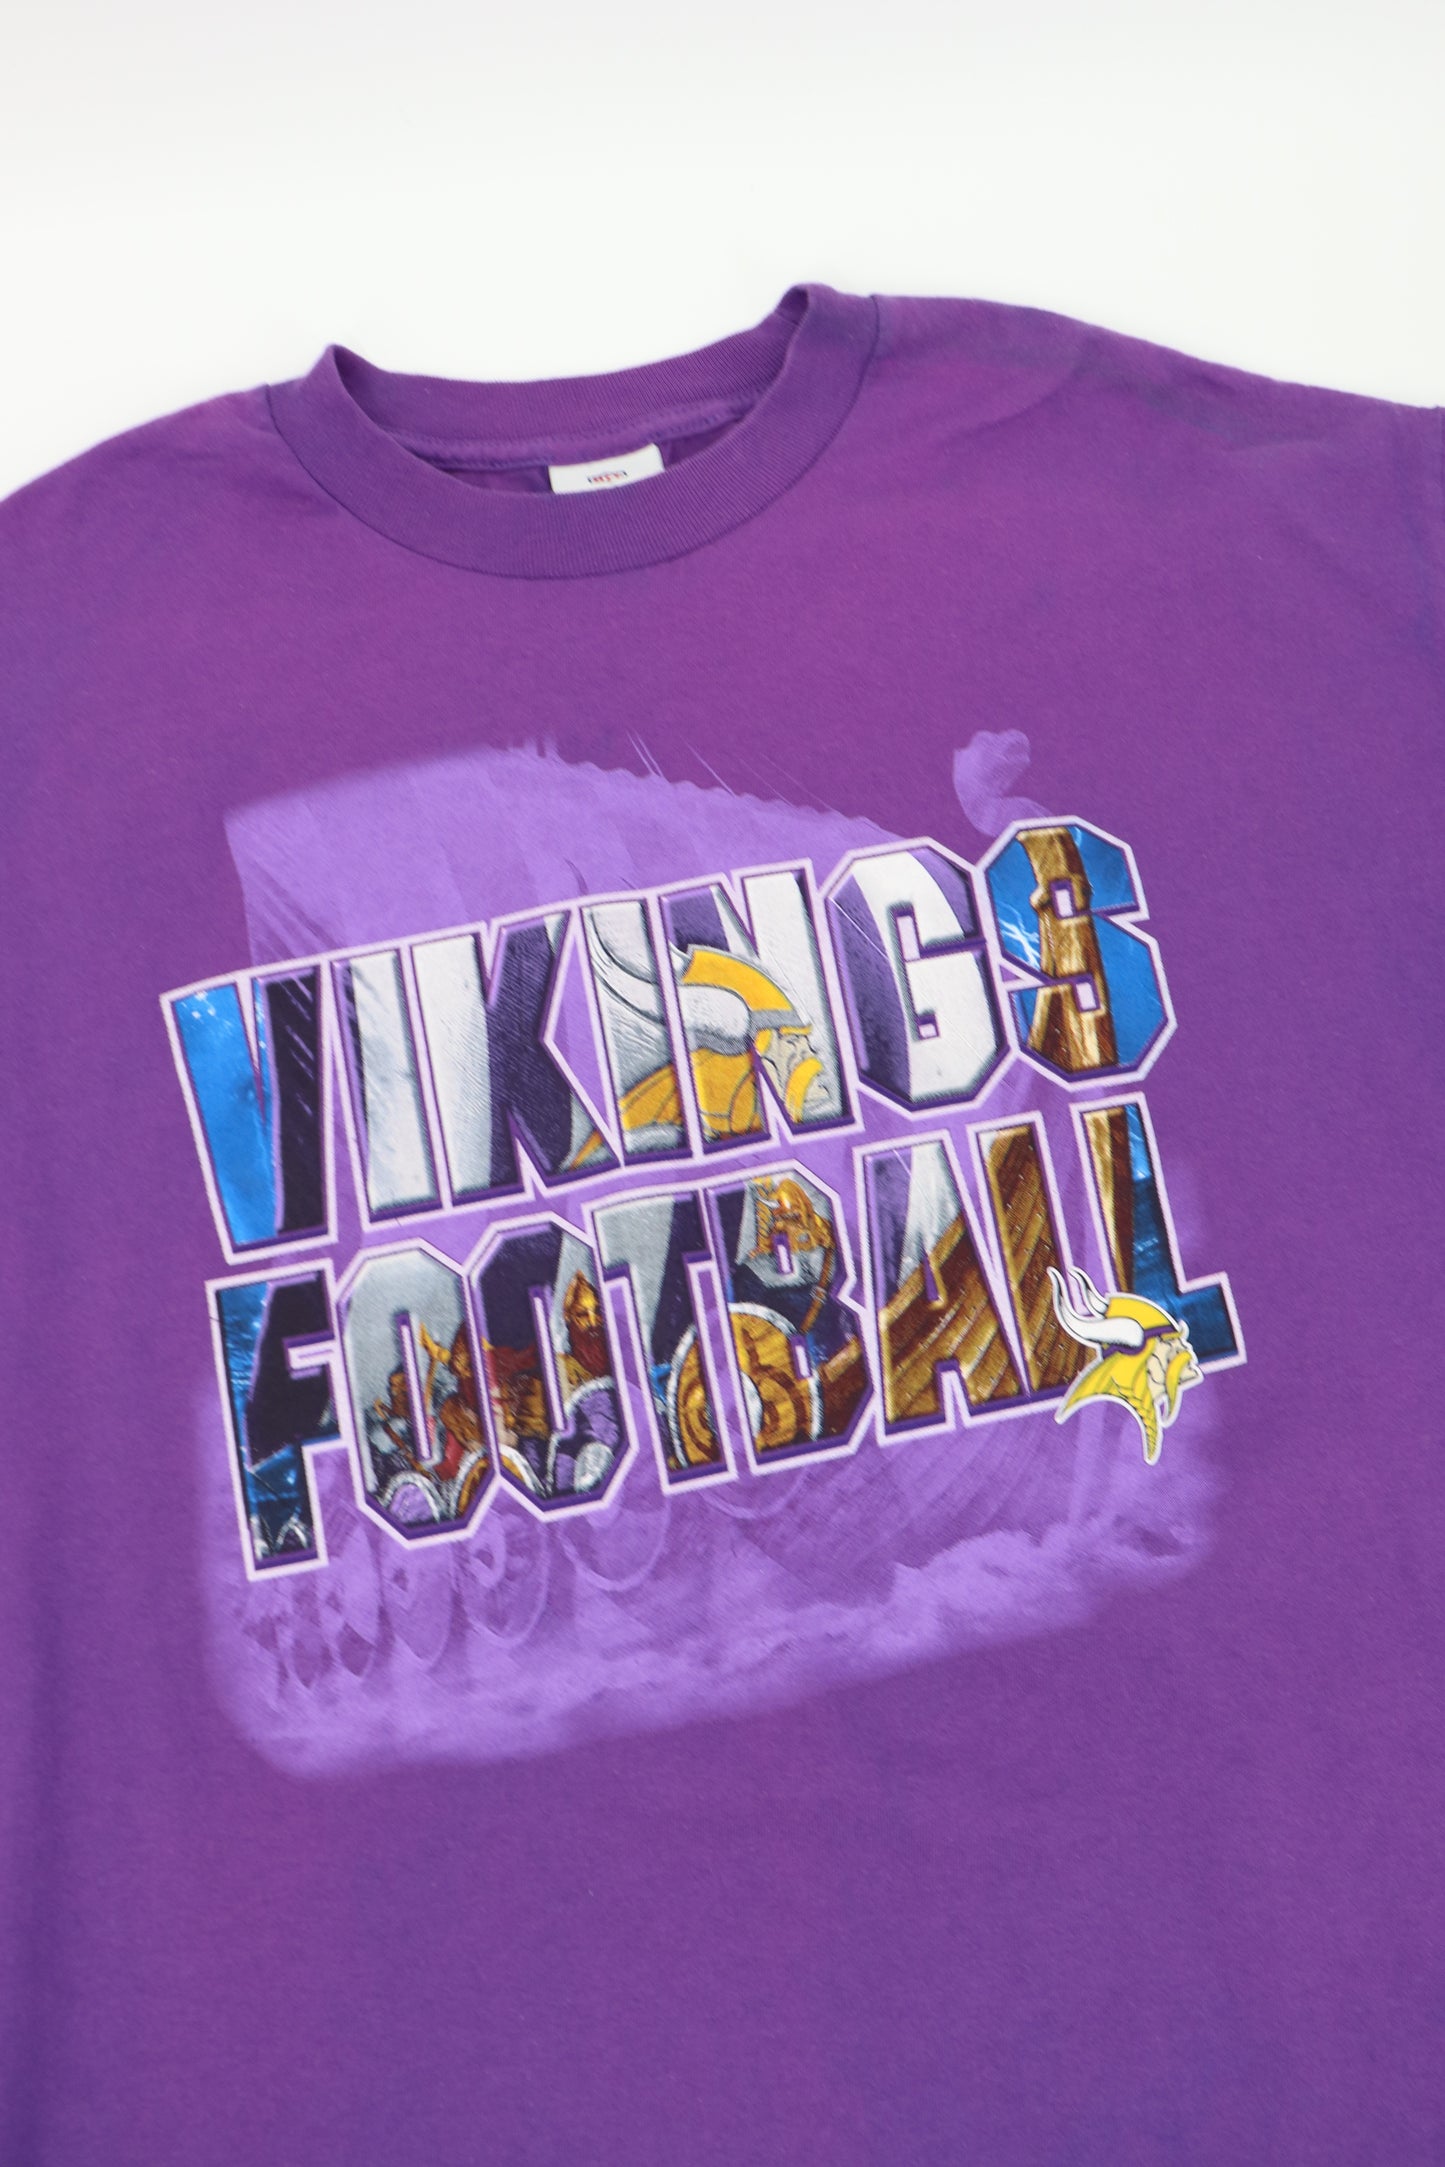 VIKINGS FOOTBALL NFL TEE (XL)